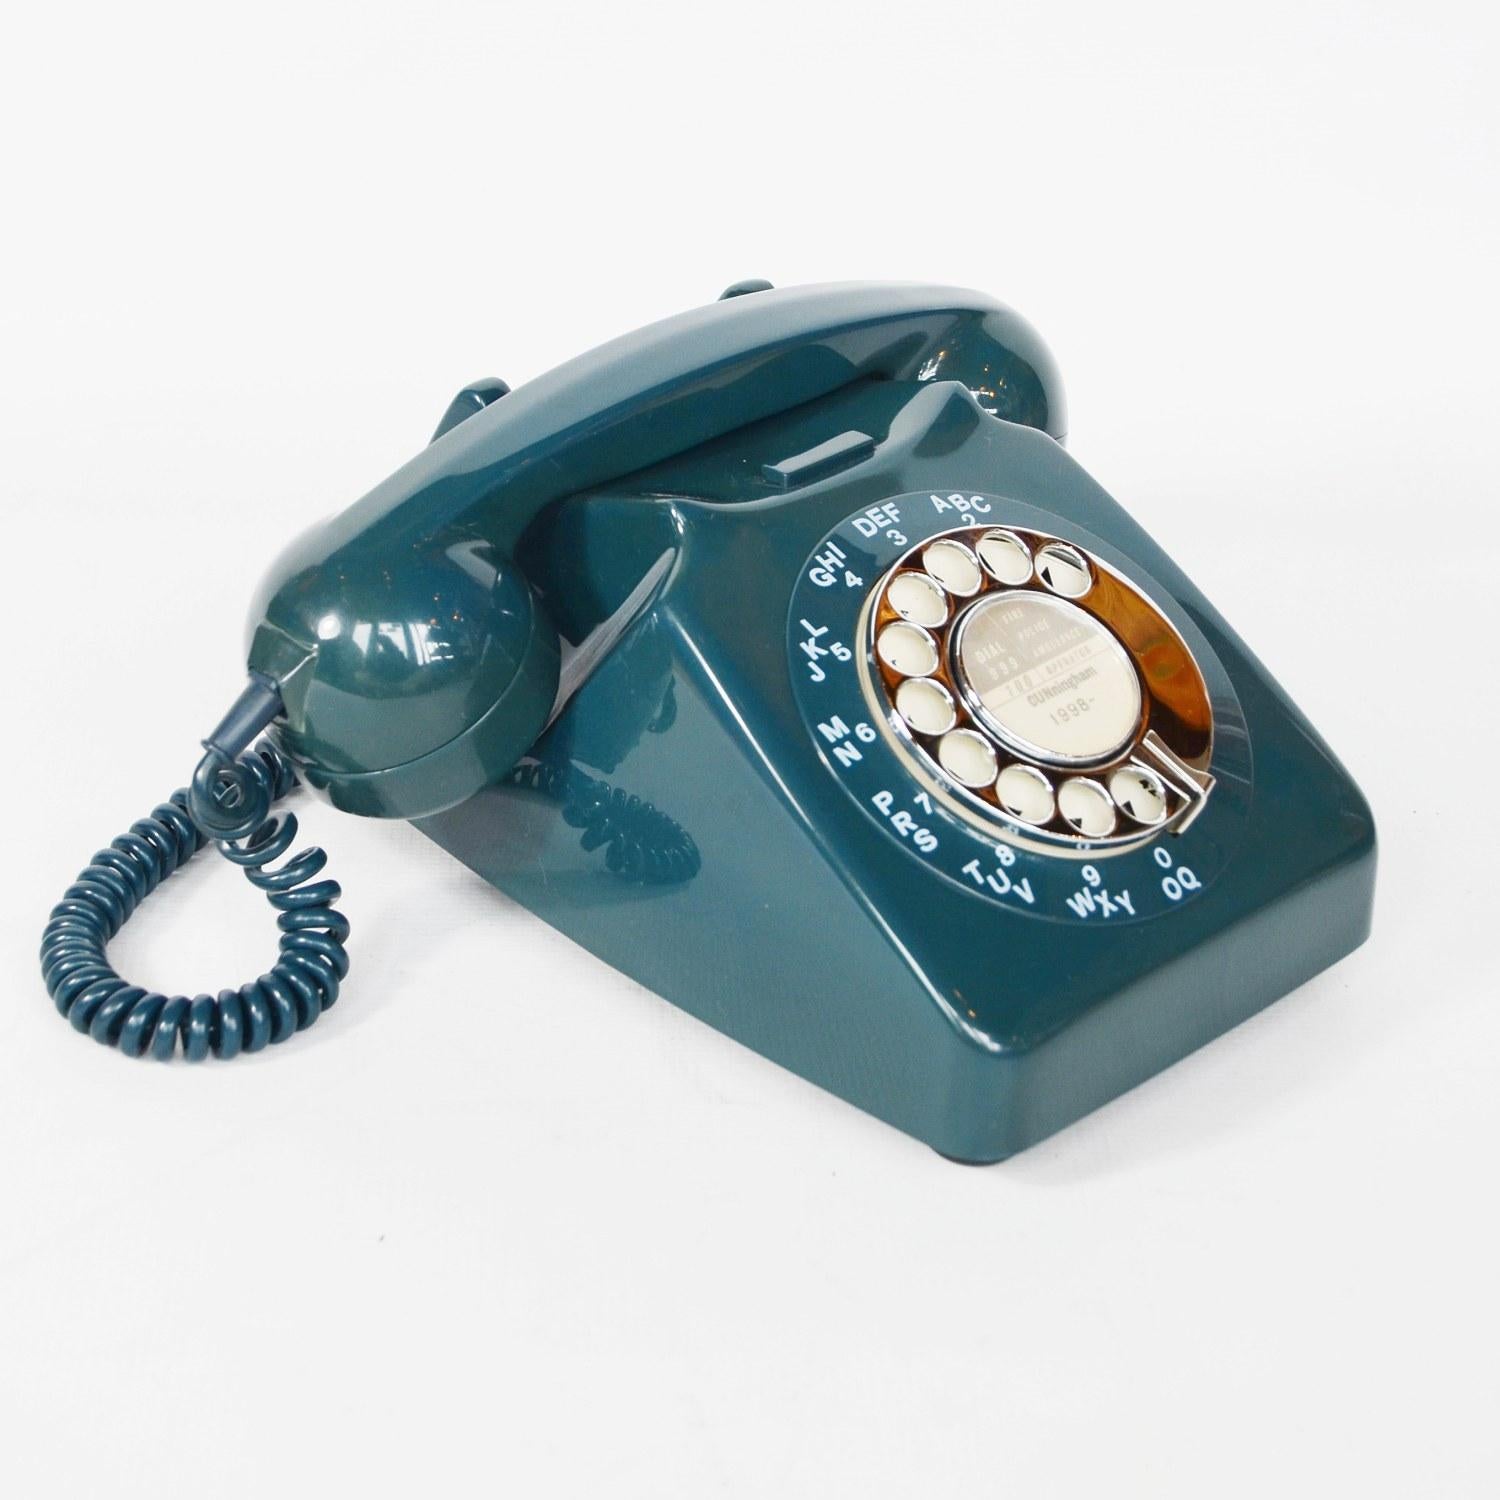 English Original 1970s Model 746L Telephone Full Working Order